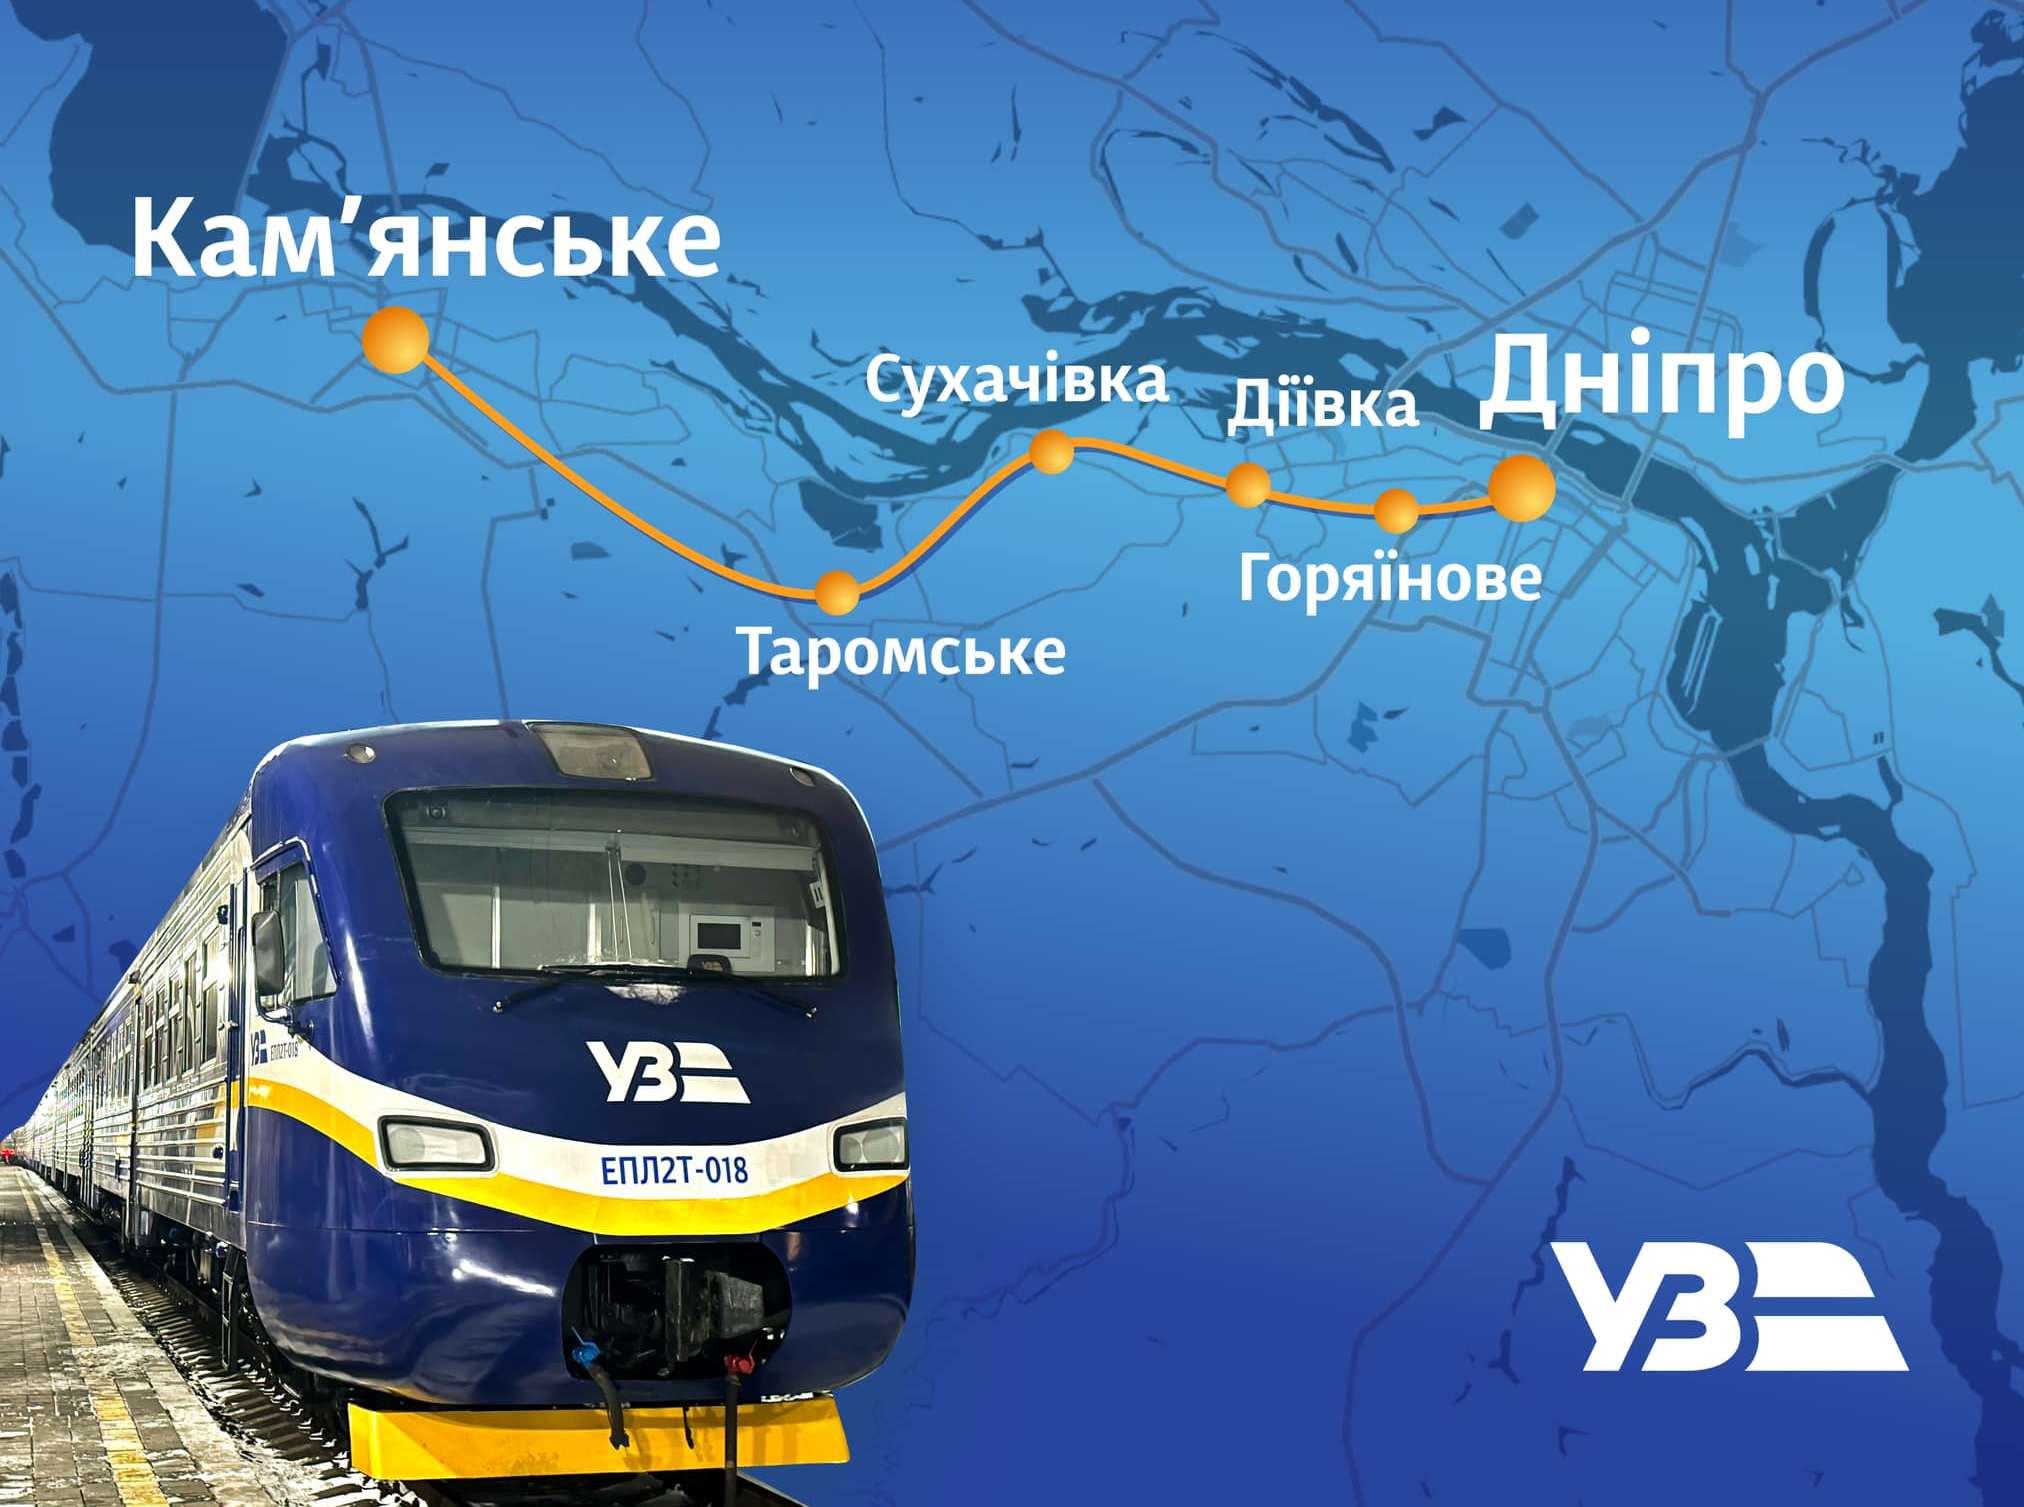 Укрзалізниця запускает первую электричку Dnipro City Express